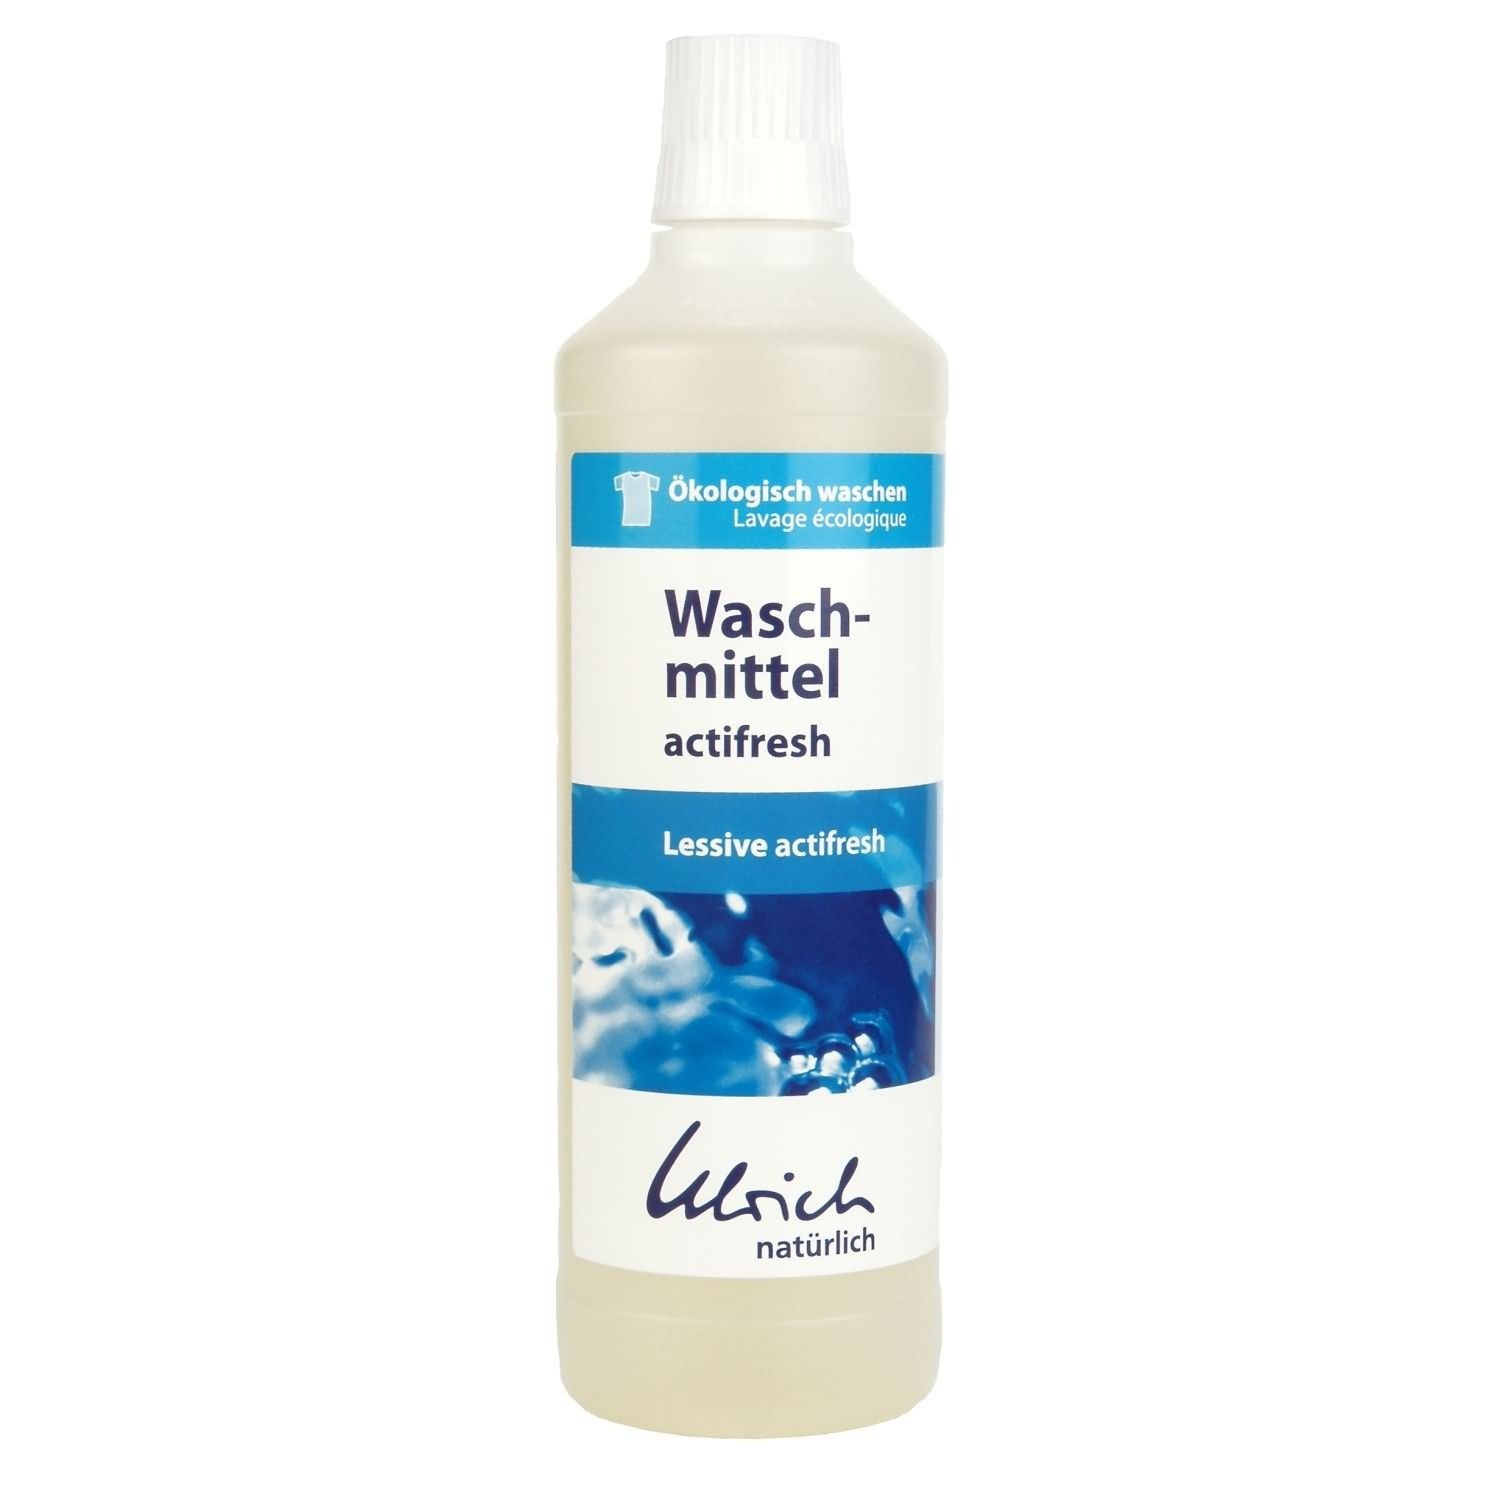 enzymfreies waschmittel - Ulrich Waschmittel actifresh.